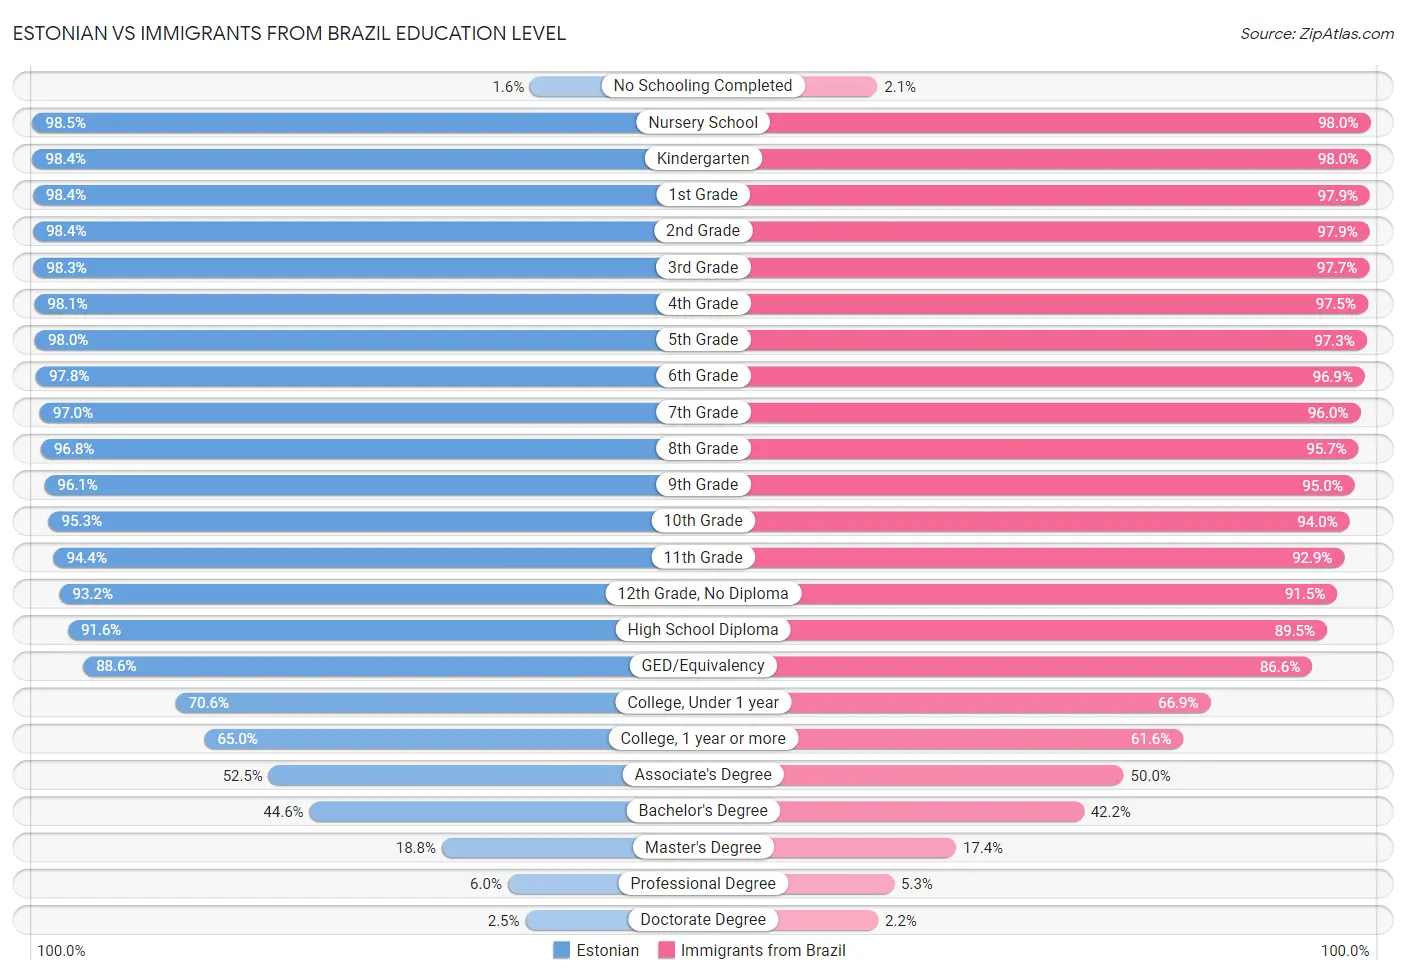 Estonian vs Immigrants from Brazil Education Level